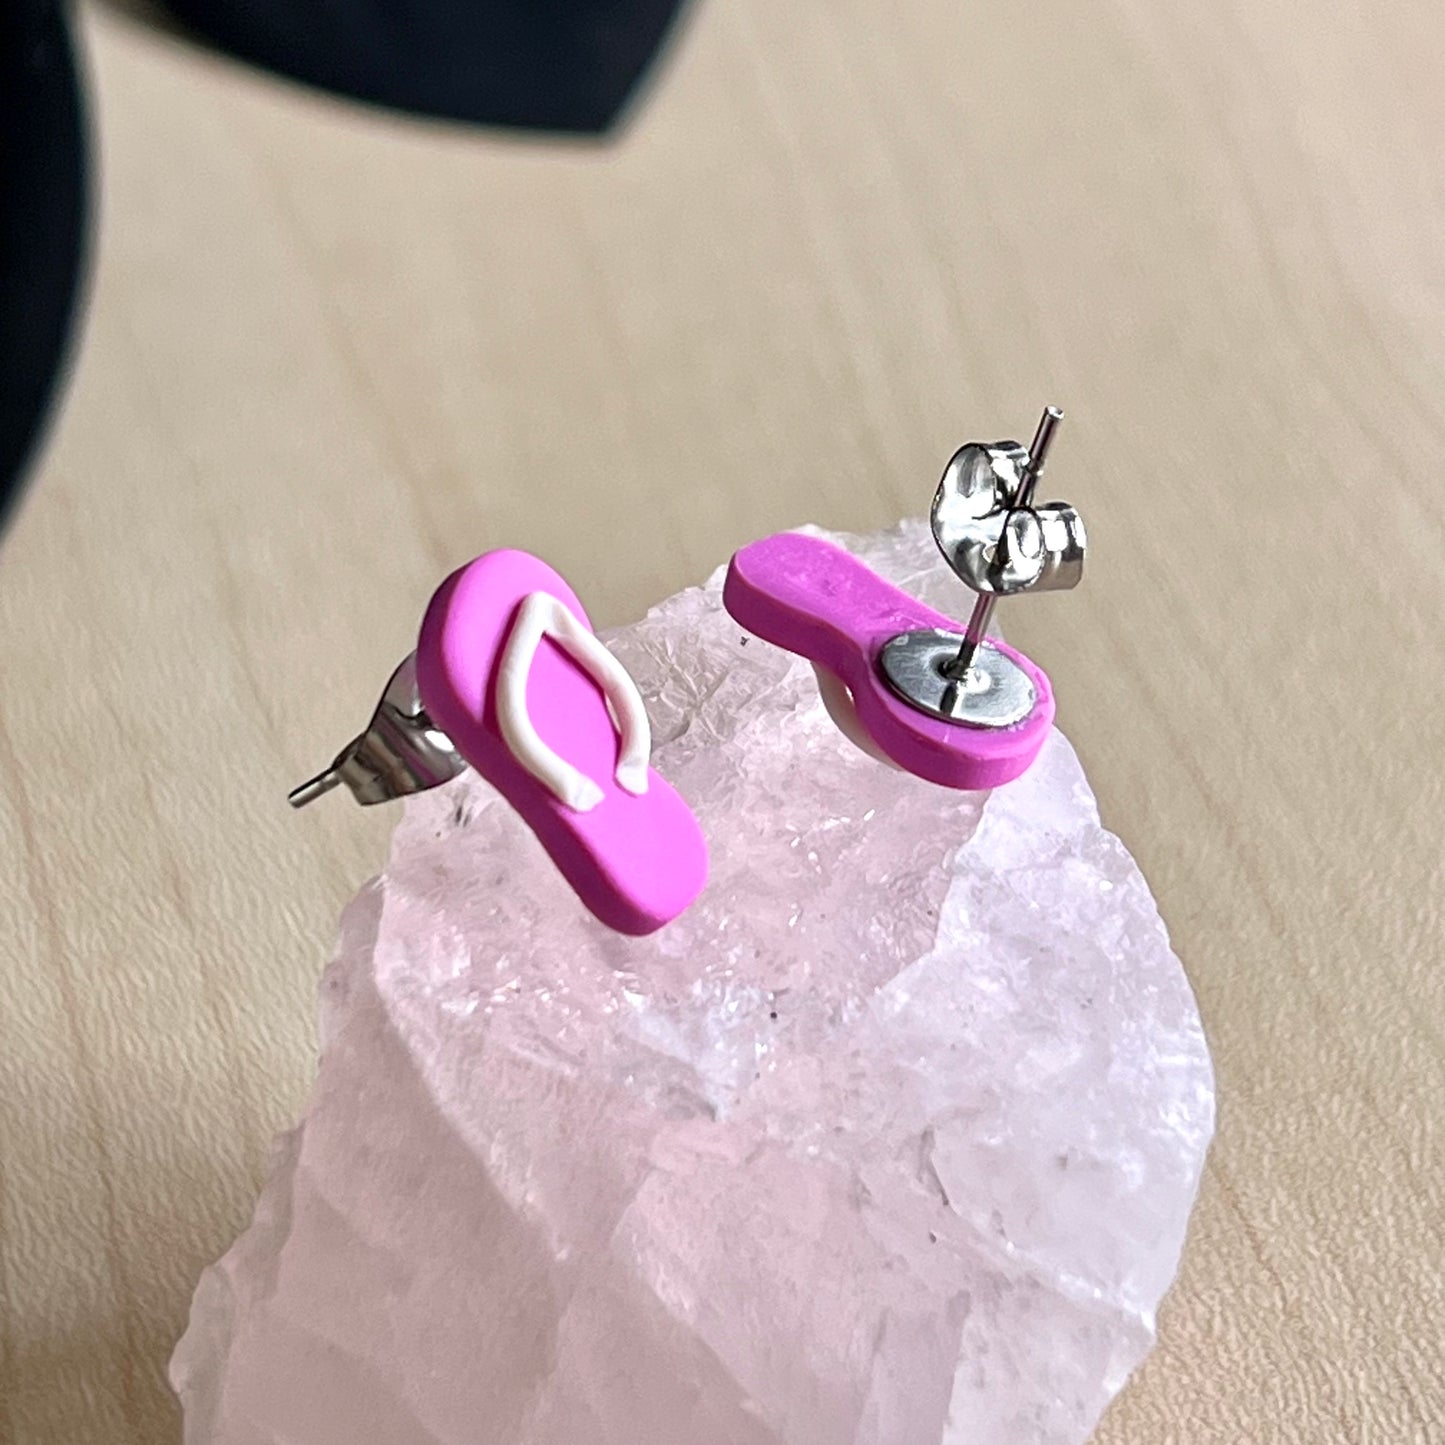 Thongs / flip flops studs, pink with white, handmade earrings